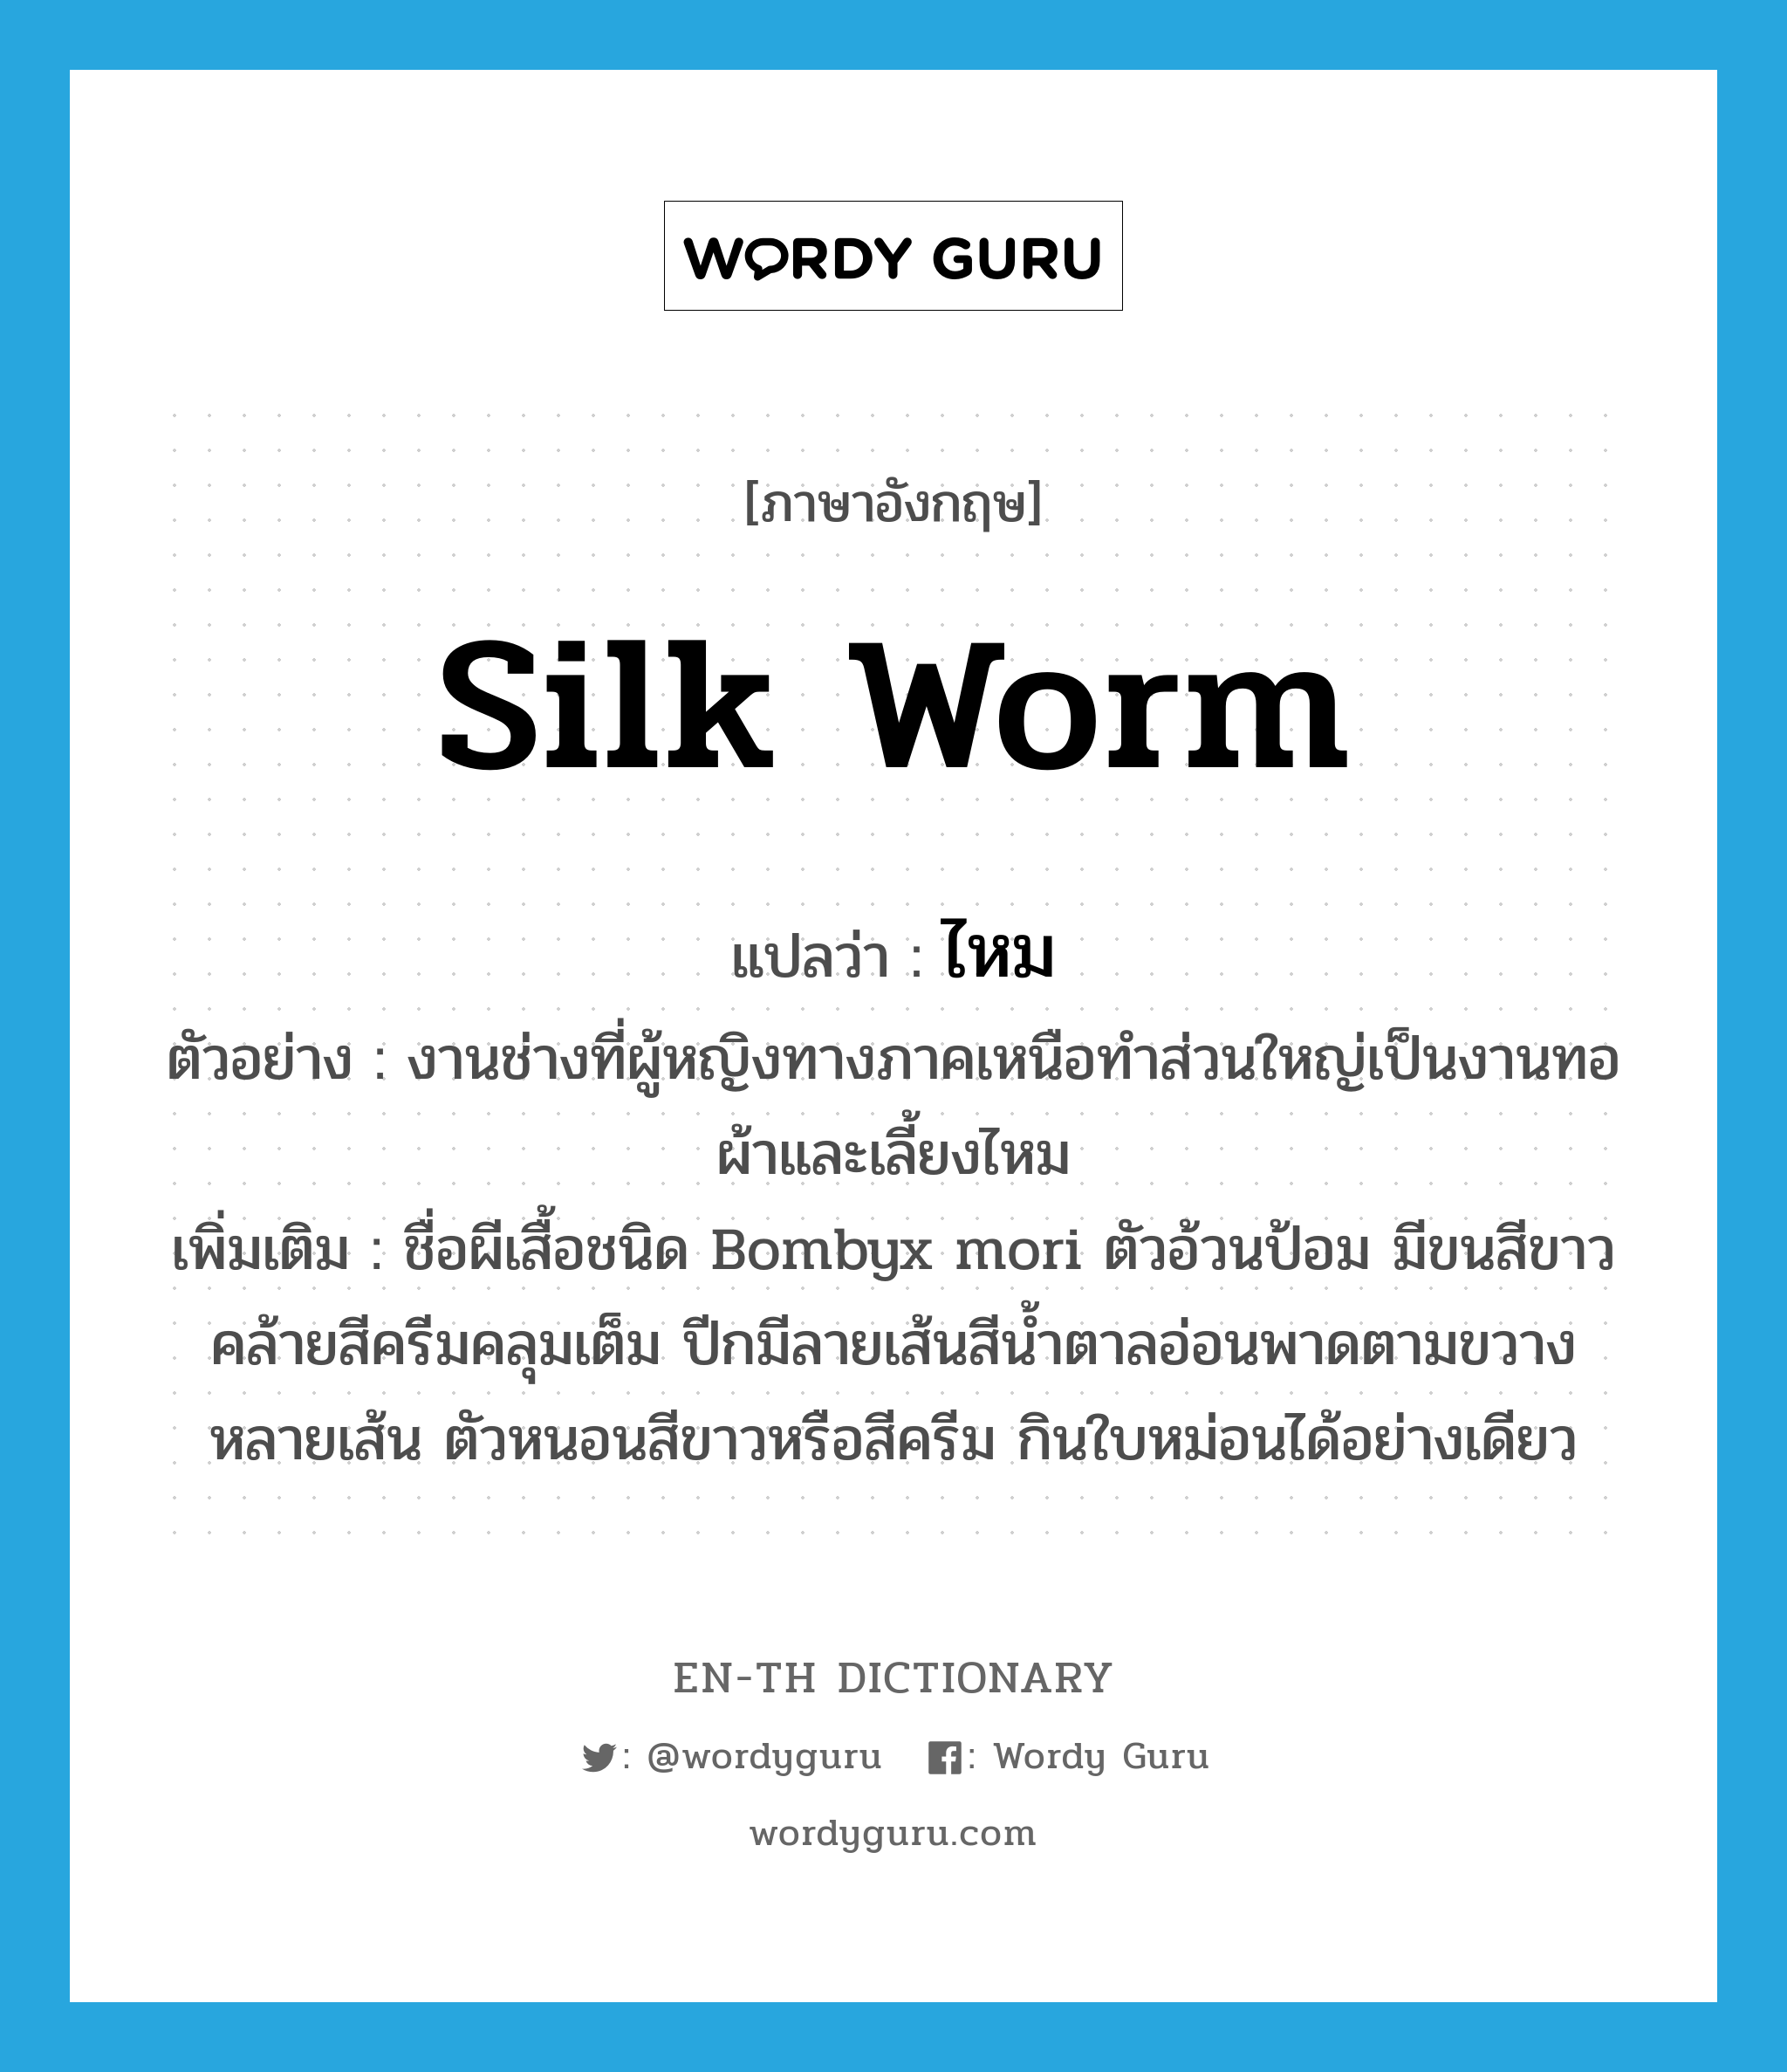 silk worm แปลว่า?, คำศัพท์ภาษาอังกฤษ silk worm แปลว่า ไหม ประเภท N ตัวอย่าง งานช่างที่ผู้หญิงทางภาคเหนือทำส่วนใหญ่เป็นงานทอผ้าและเลี้ยงไหม เพิ่มเติม ชื่อผีเสื้อชนิด Bombyx mori ตัวอ้วนป้อม มีขนสีขาวคล้ายสีครีมคลุมเต็ม ปีกมีลายเส้นสีน้ำตาลอ่อนพาดตามขวางหลายเส้น ตัวหนอนสีขาวหรือสีครีม กินใบหม่อนได้อย่างเดียว หมวด N